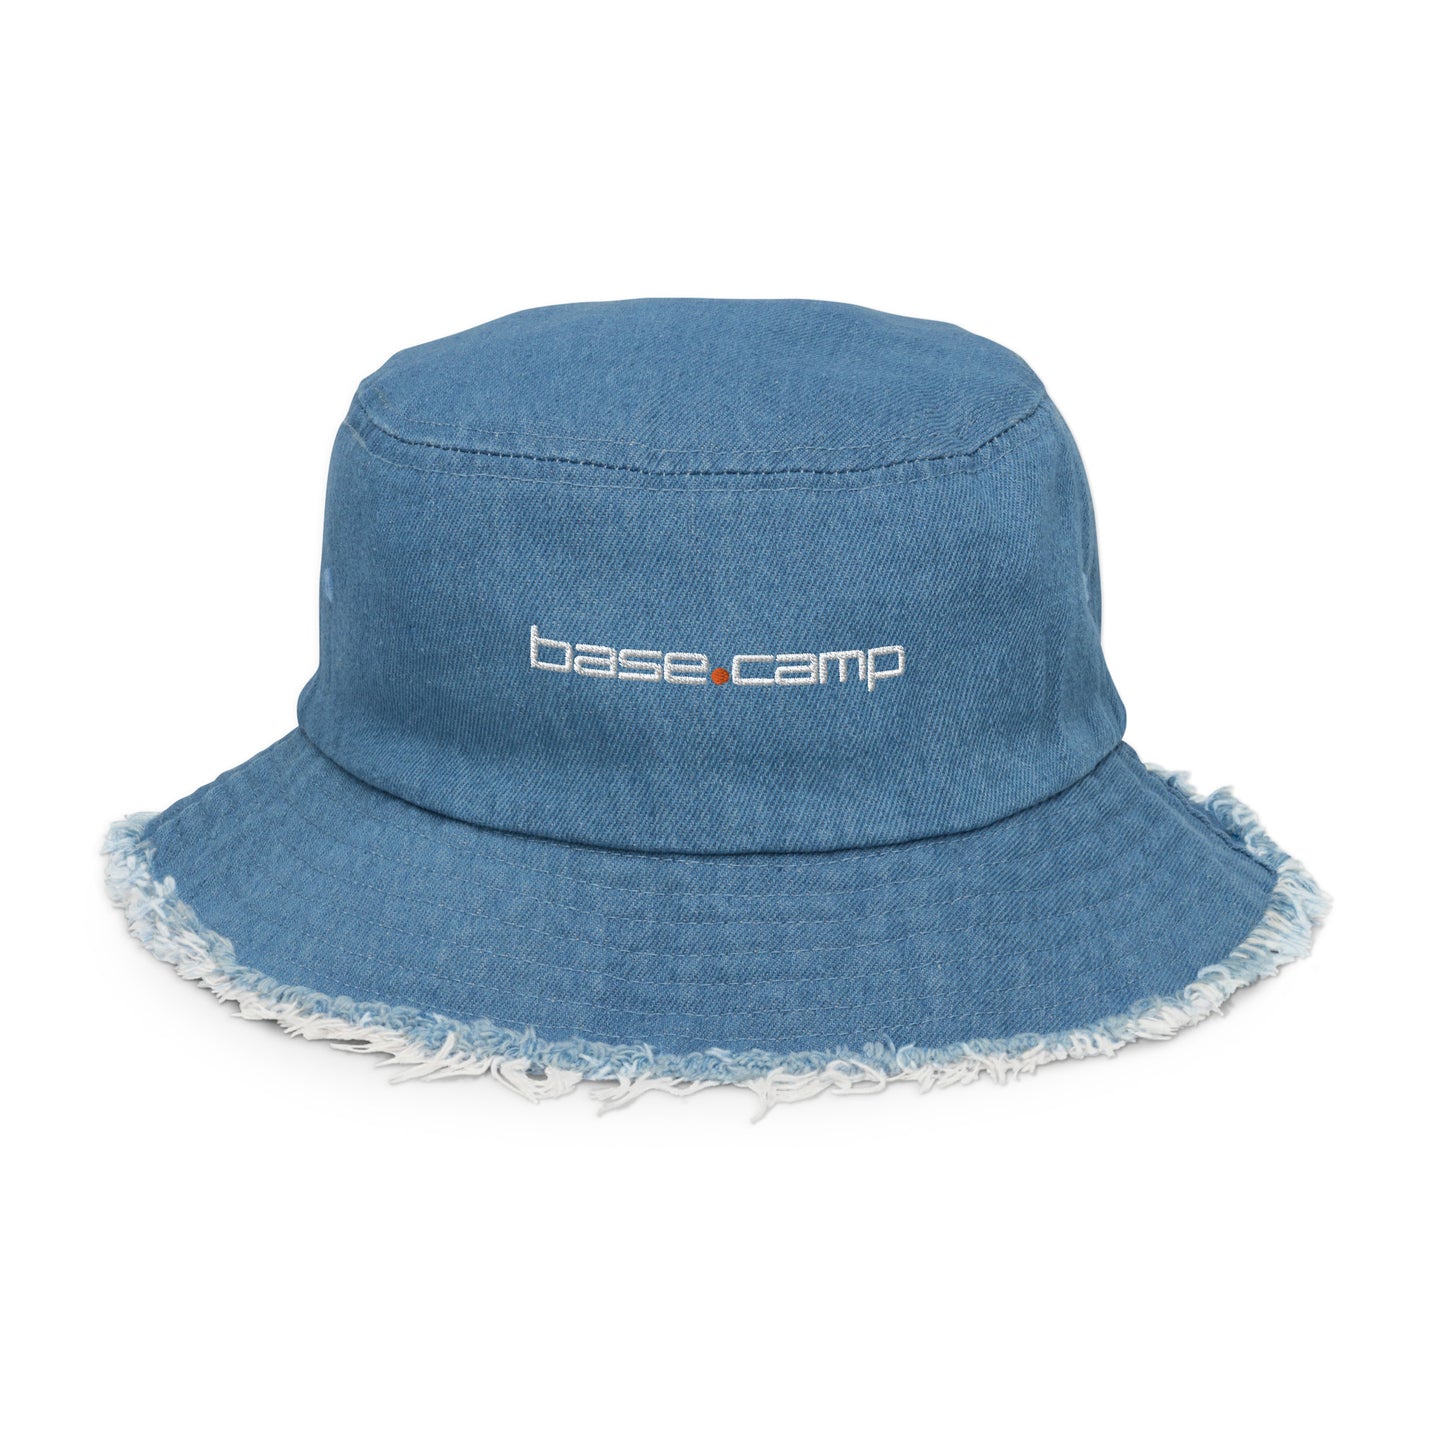 Base Camp distressed denim bucket hat